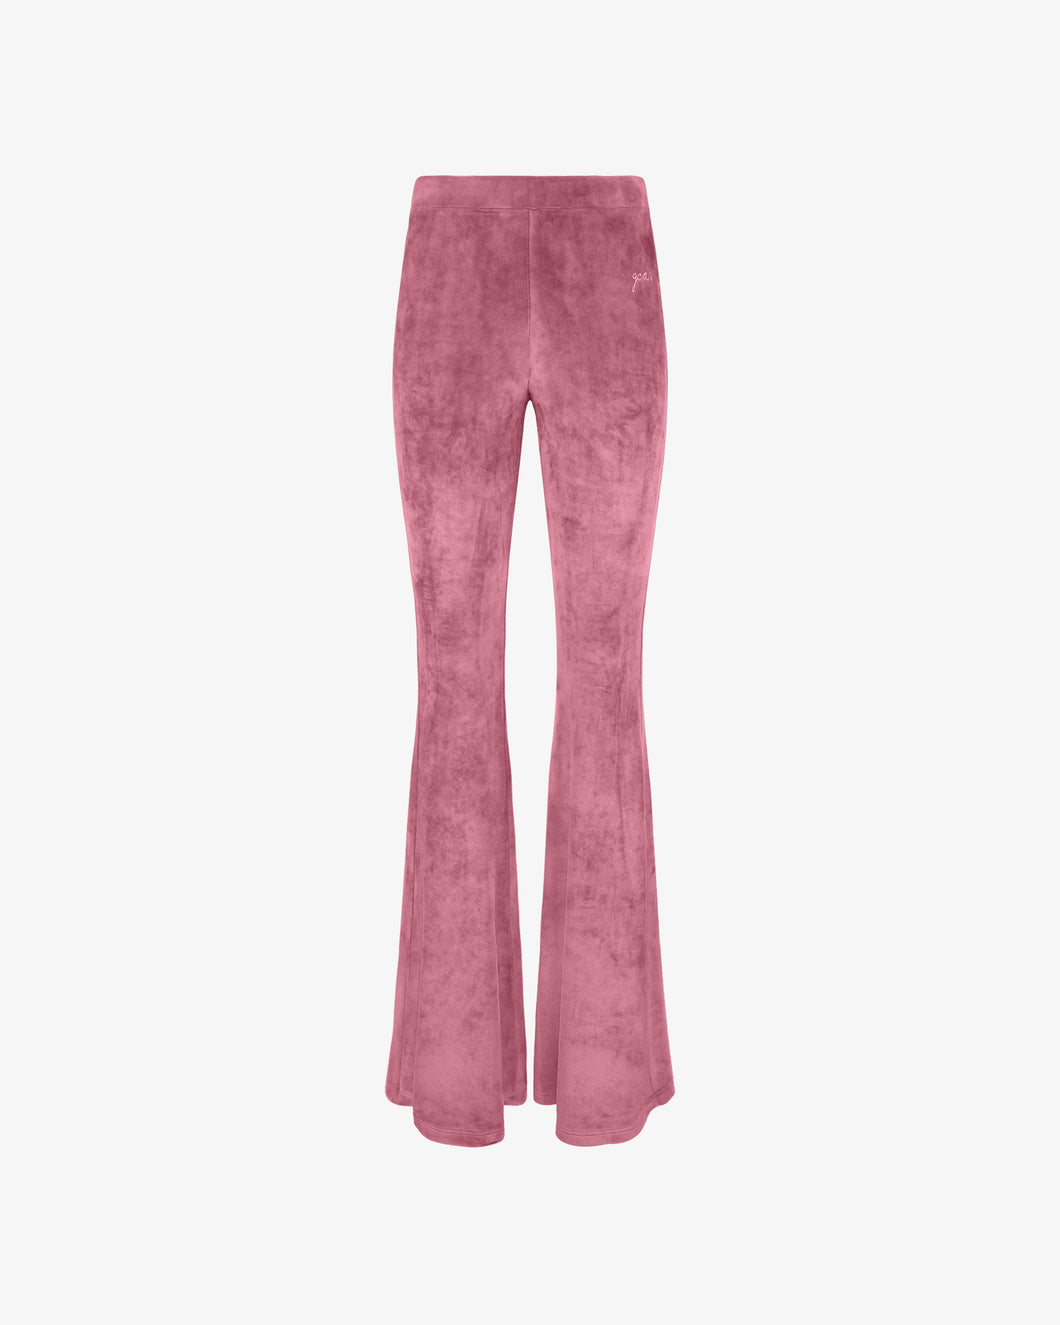 Velvet Trousers | Women Trousers Mauve Pink | GCDS®